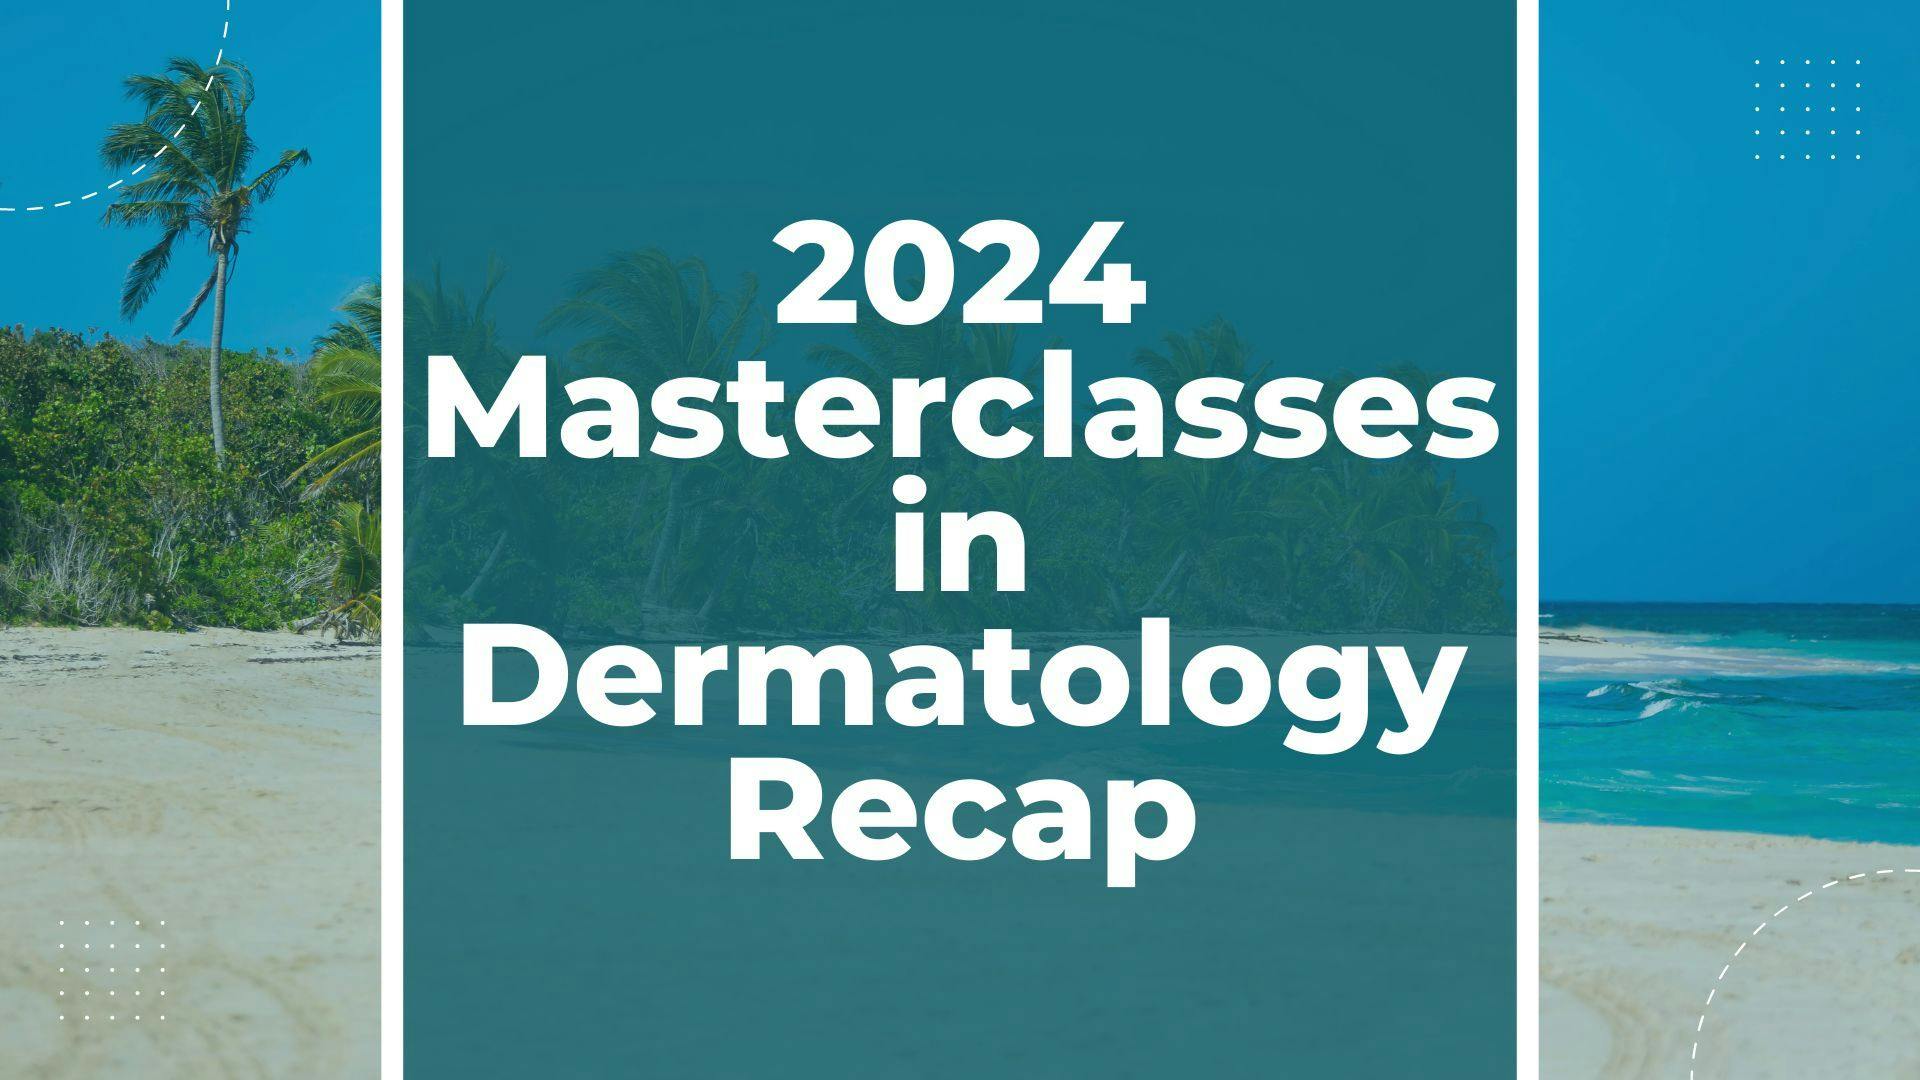 SLIDESHOW: 2024 Masterclasses in Dermatology Recap